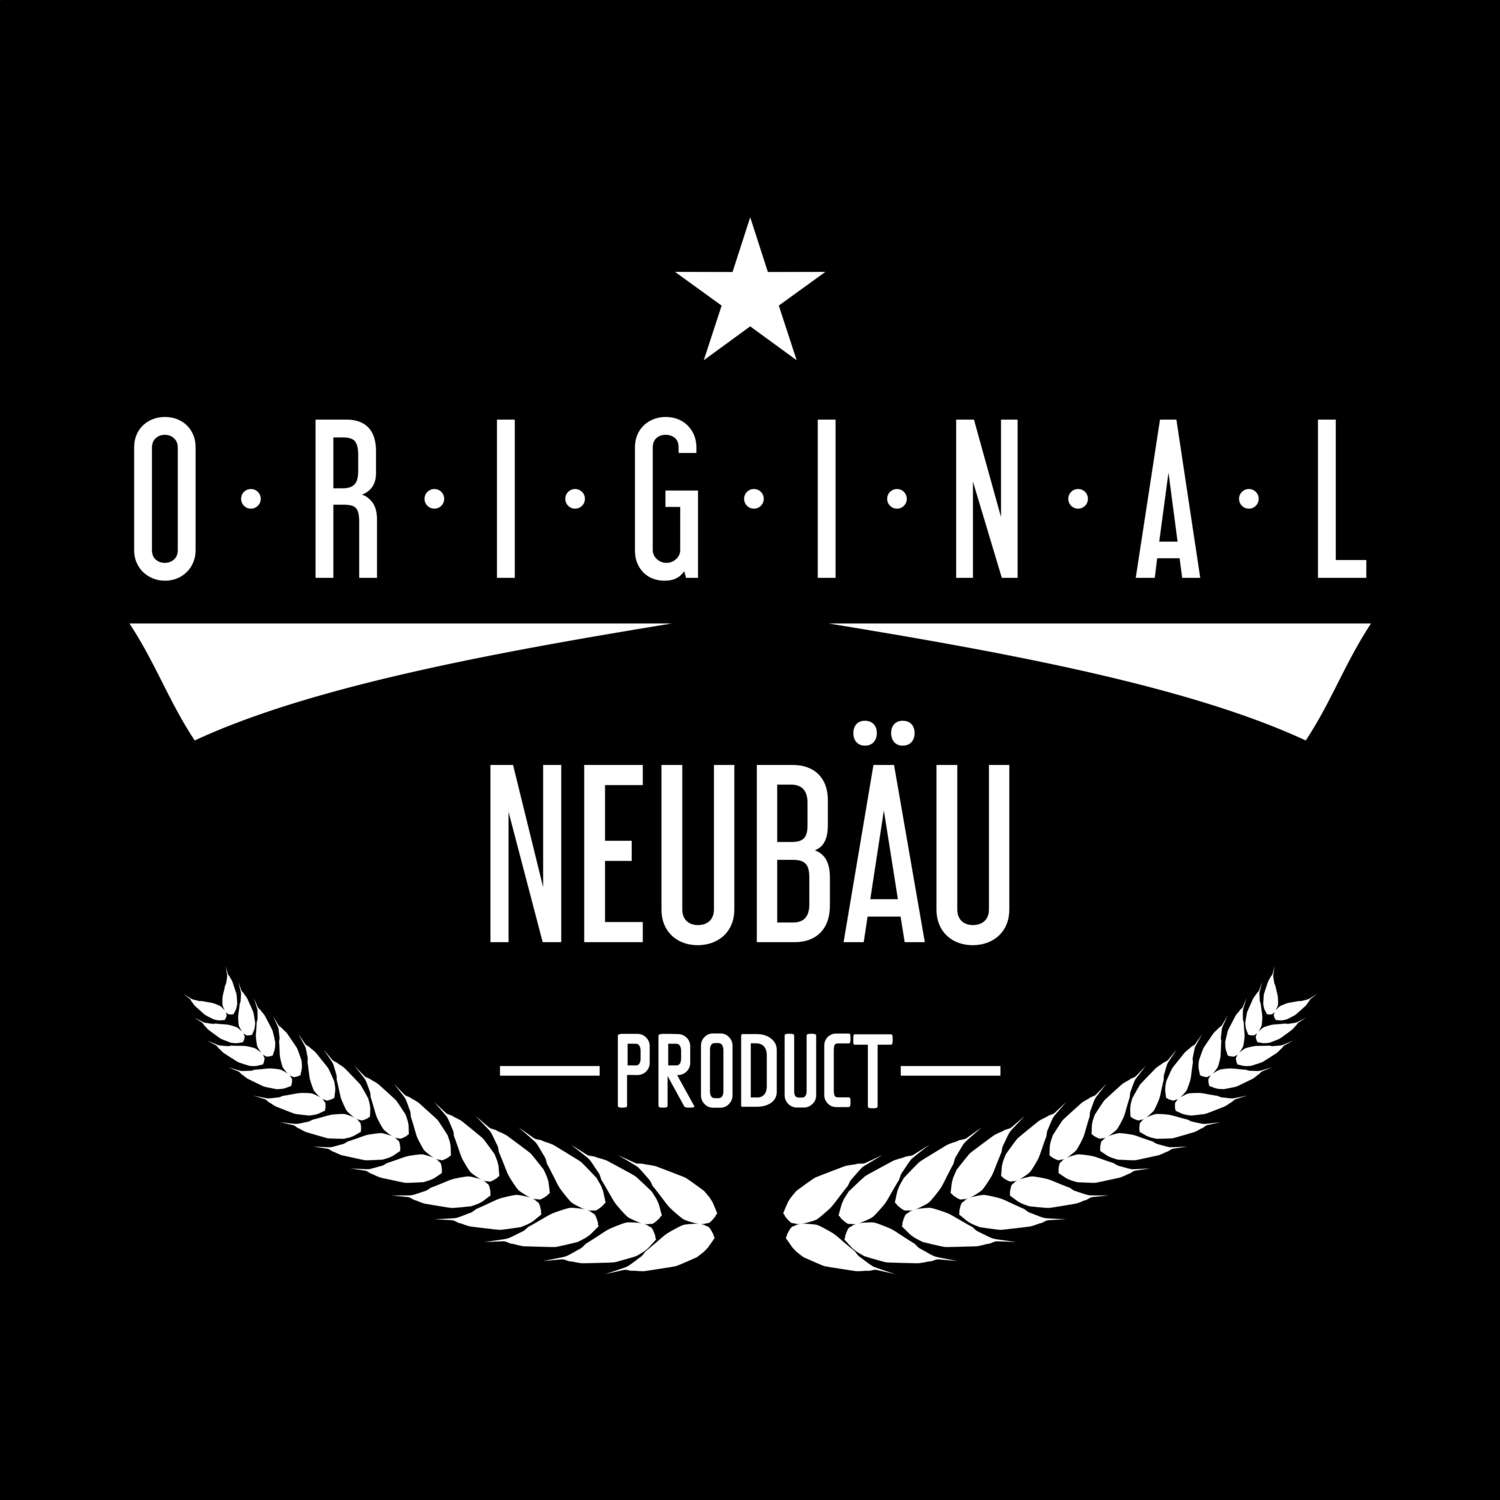 Neubäu T-Shirt »Original Product«